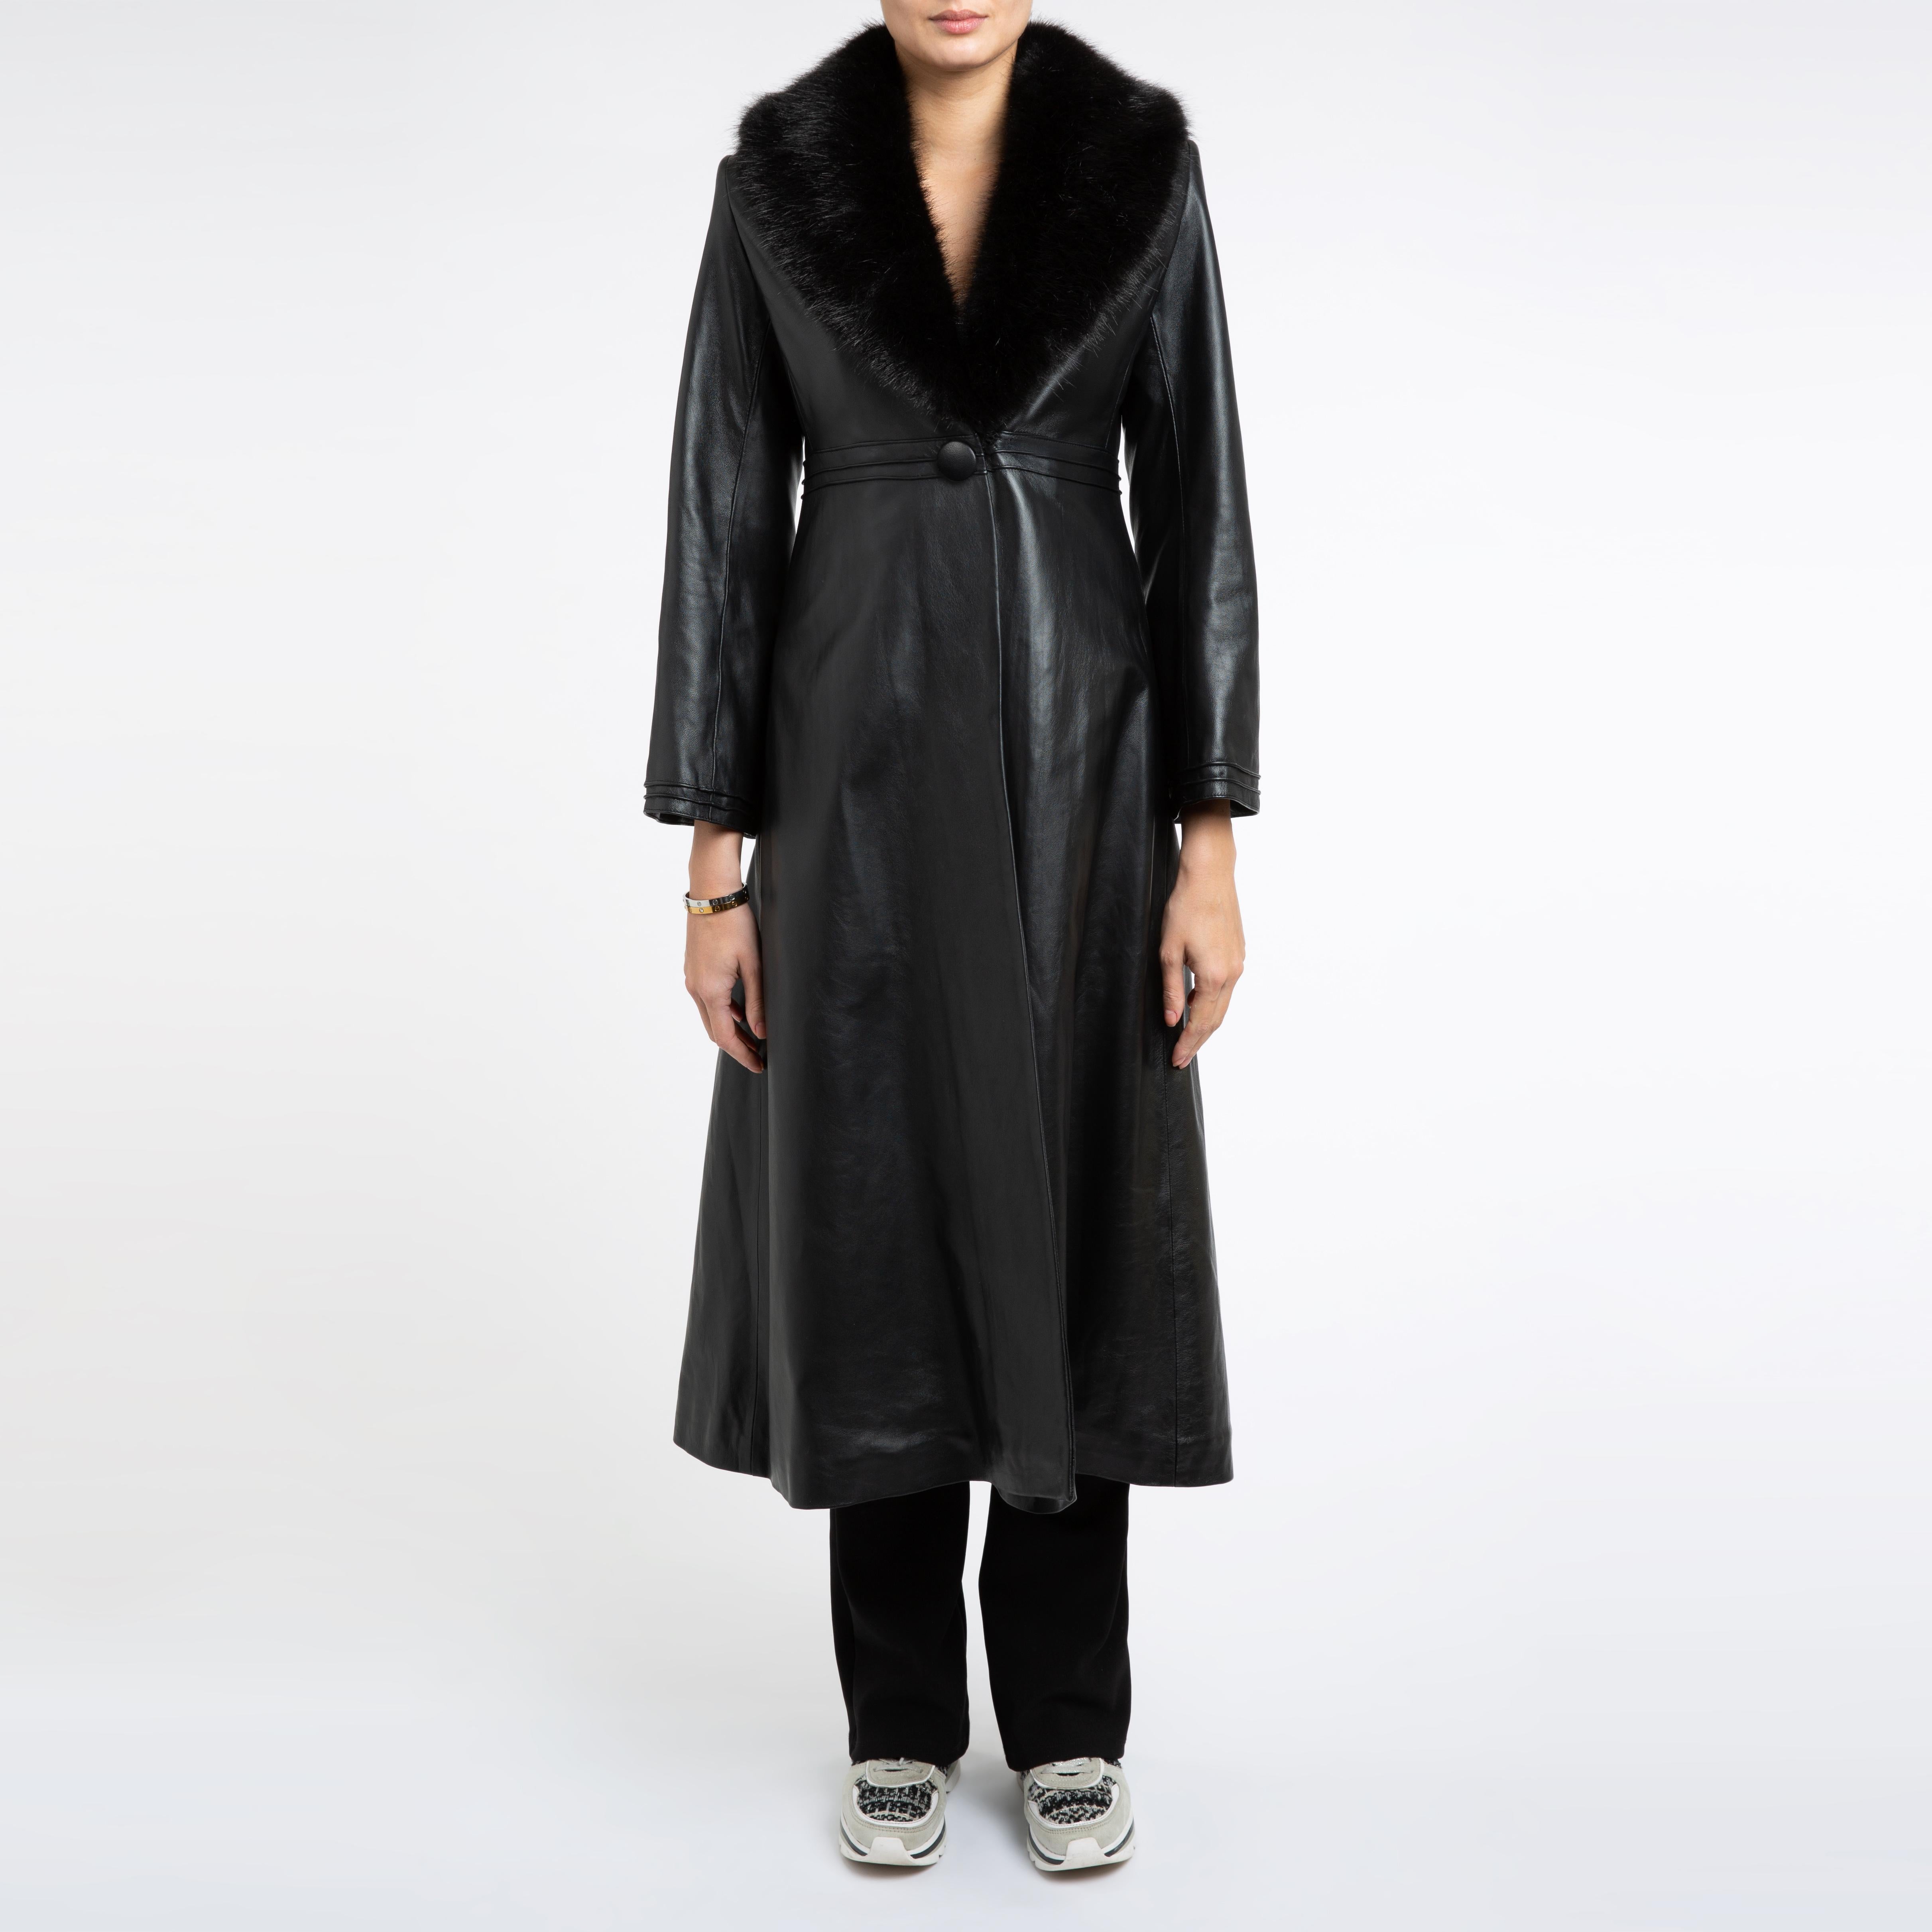 Verheyen London Edward Leather Coat with Faux Fur Collar in Black - Size uk 10 For Sale 14